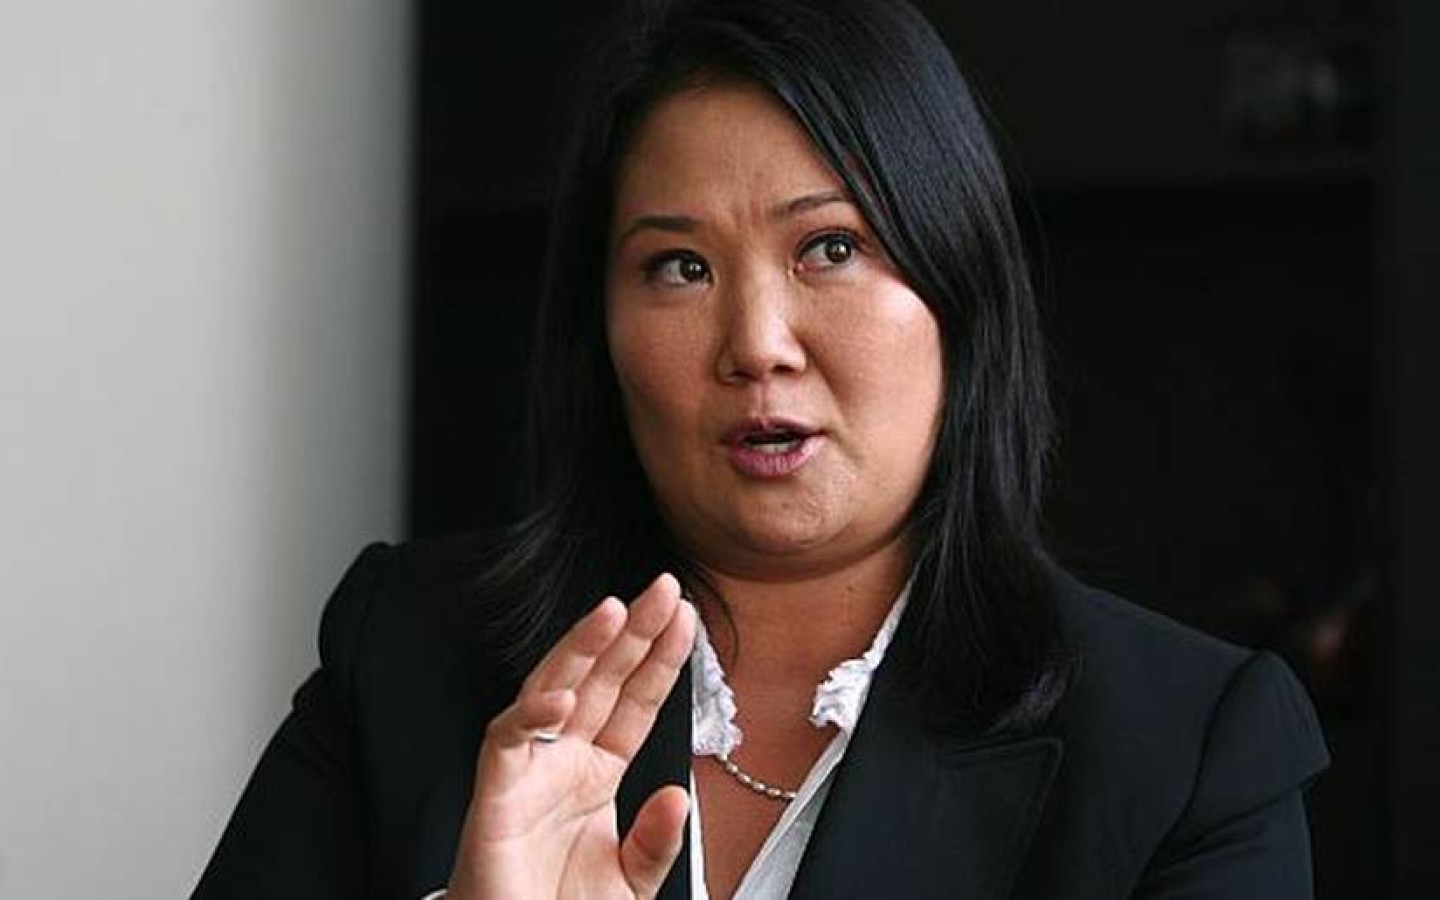 DEA asegura que Keiko Fujimori nunca ha sido investigada